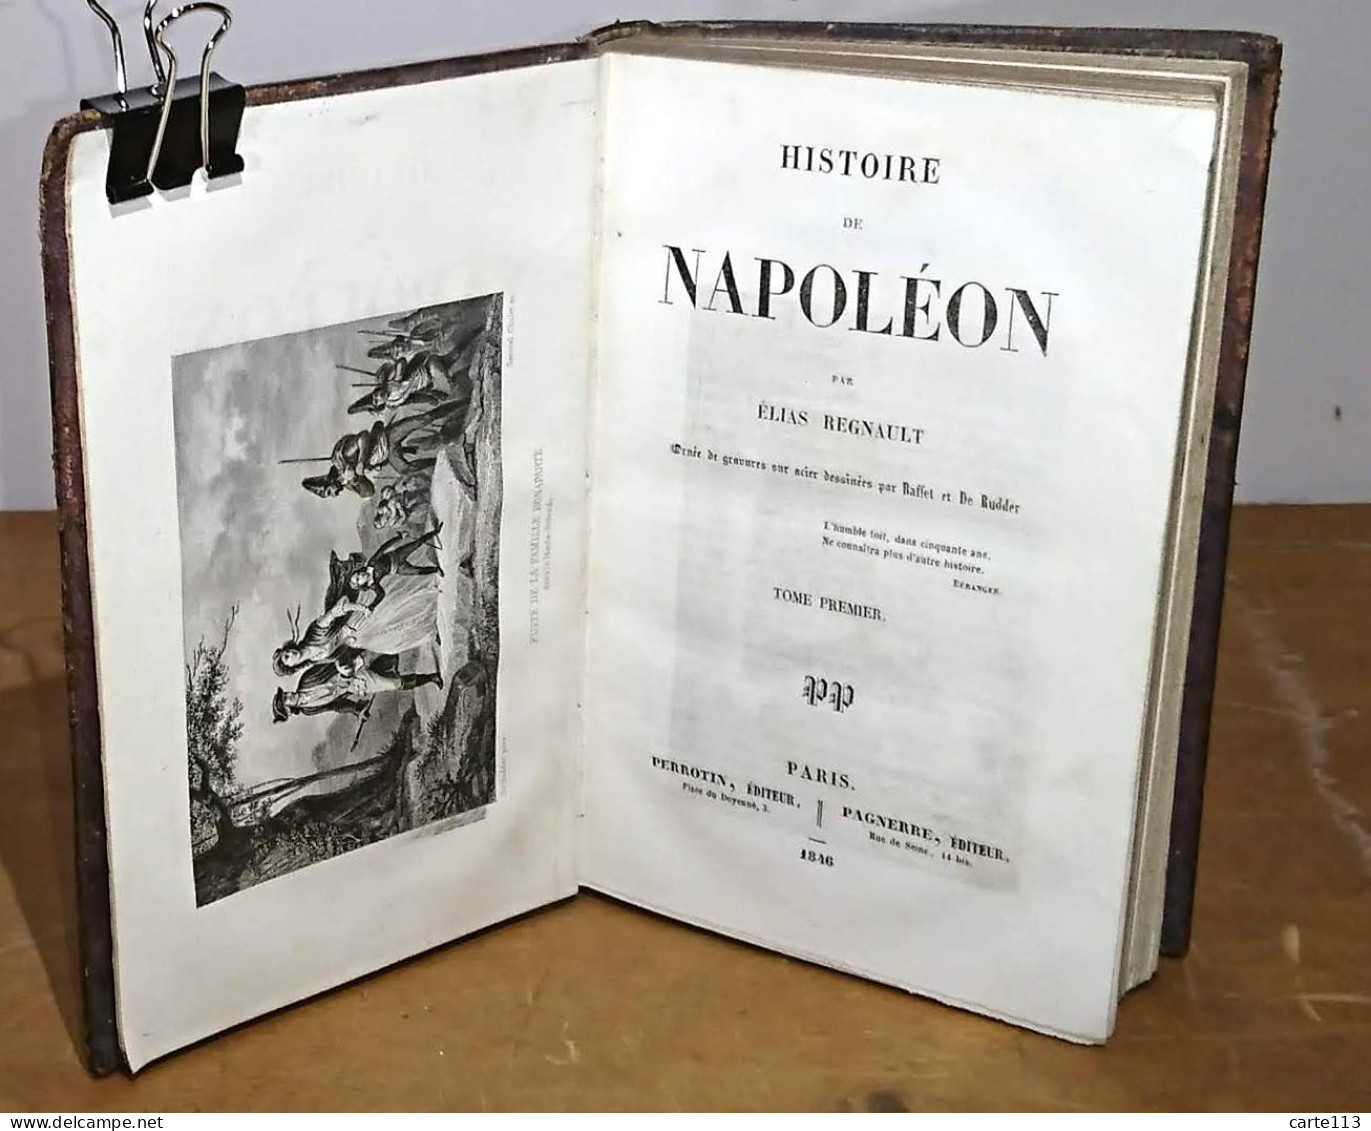 REGNAULT Elias - HISTOIRE DE NAPOLEON - TOME PREMIER - 1801-1900